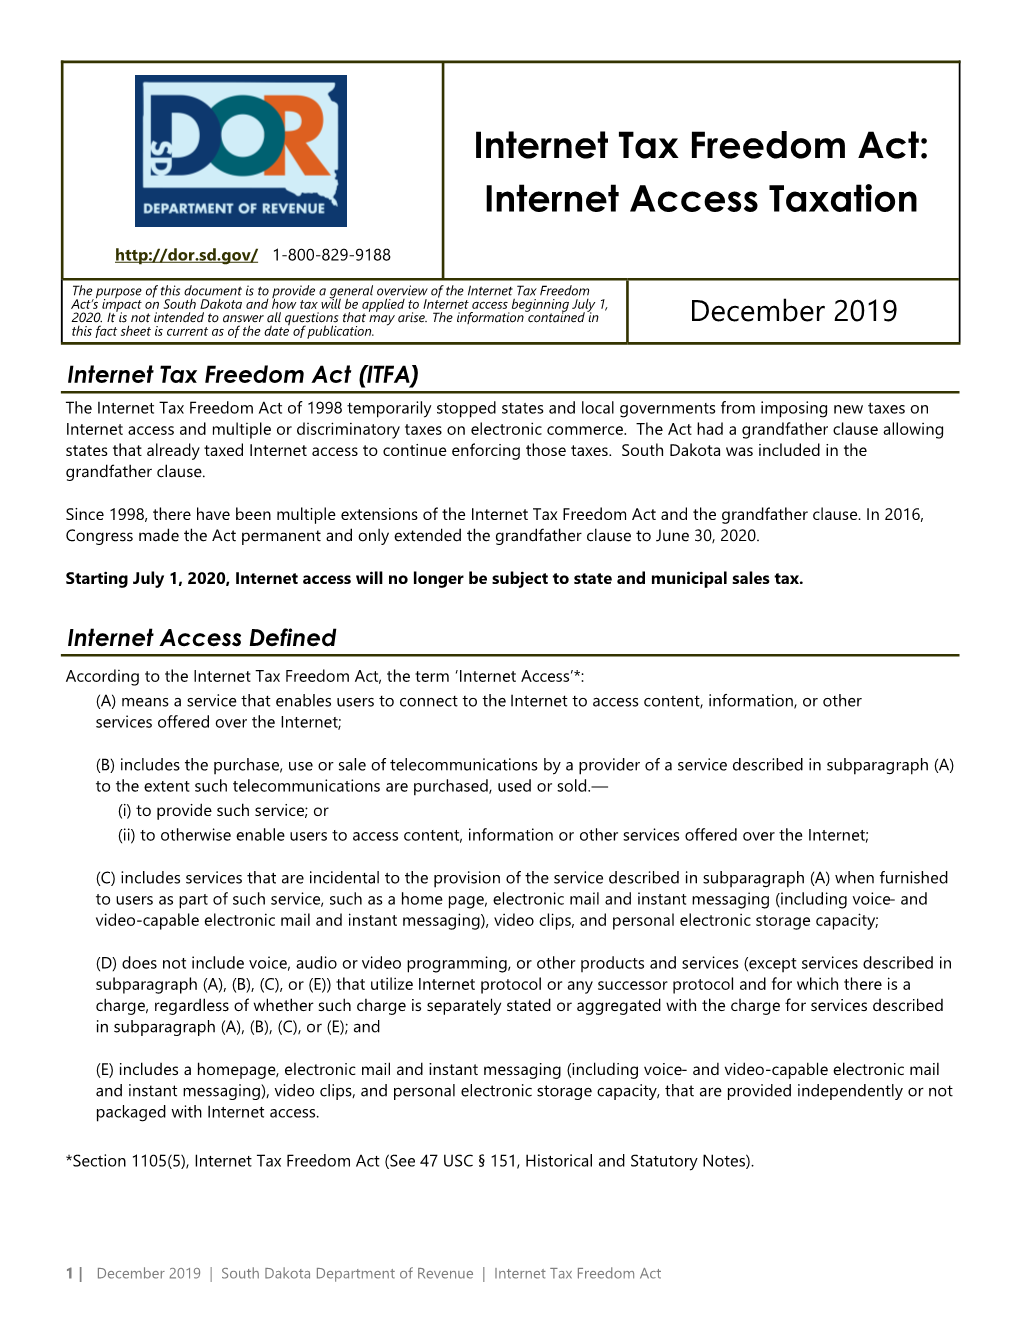 Internet Tax Freedom Act: Internet Access Taxation